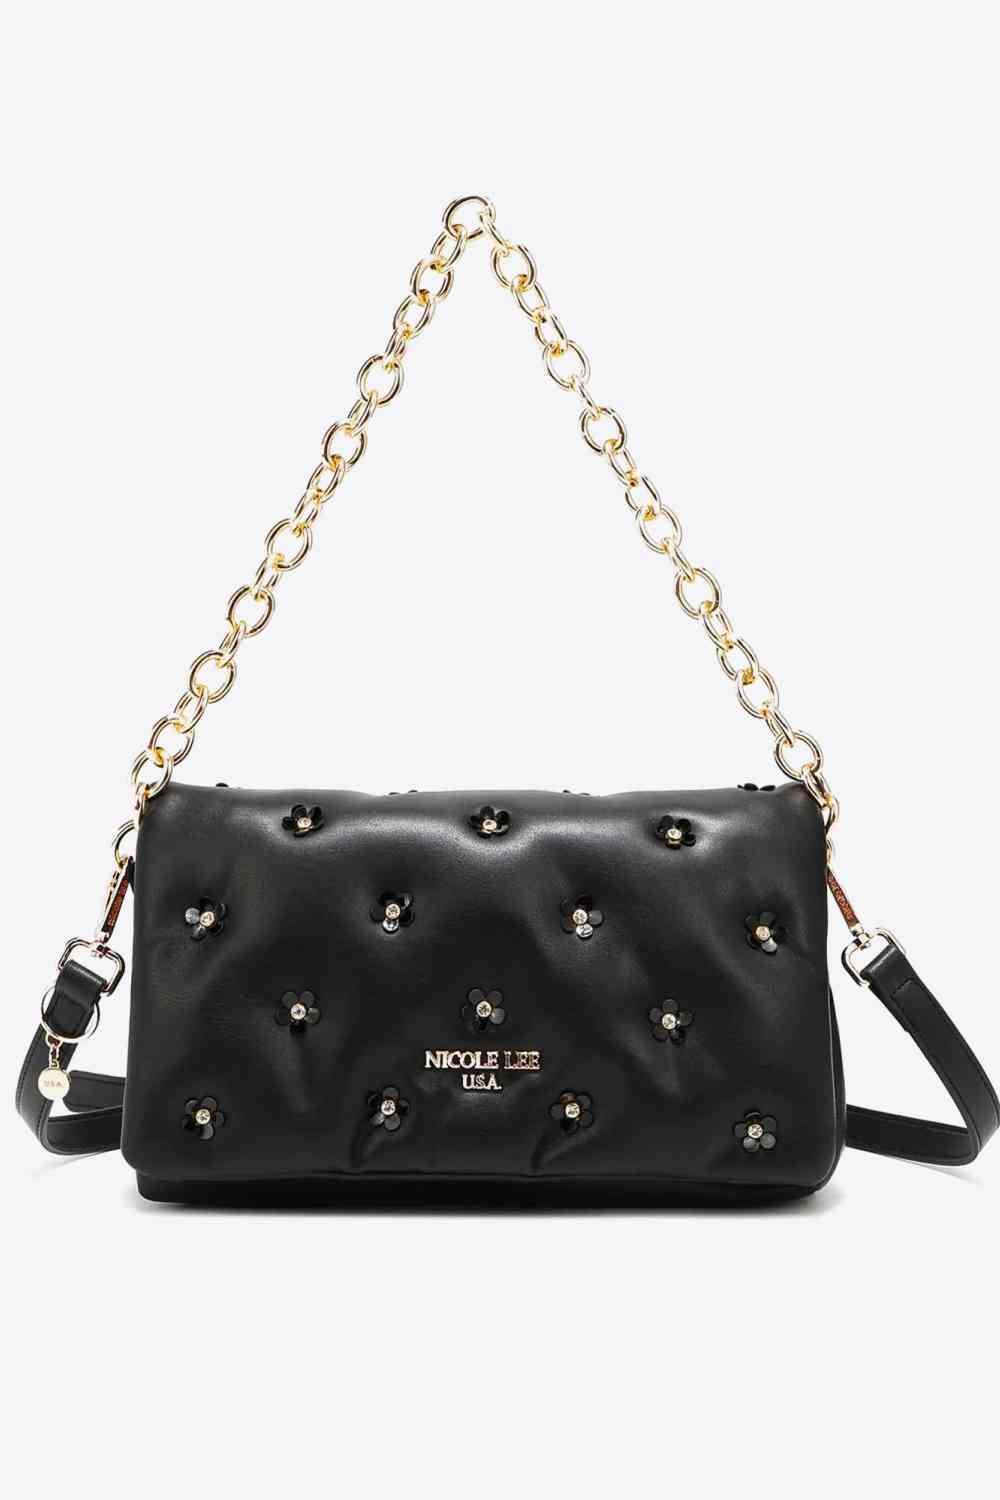 Nicole Lee USA Diamond Flower Messenger Crossbody Bag Black One Size